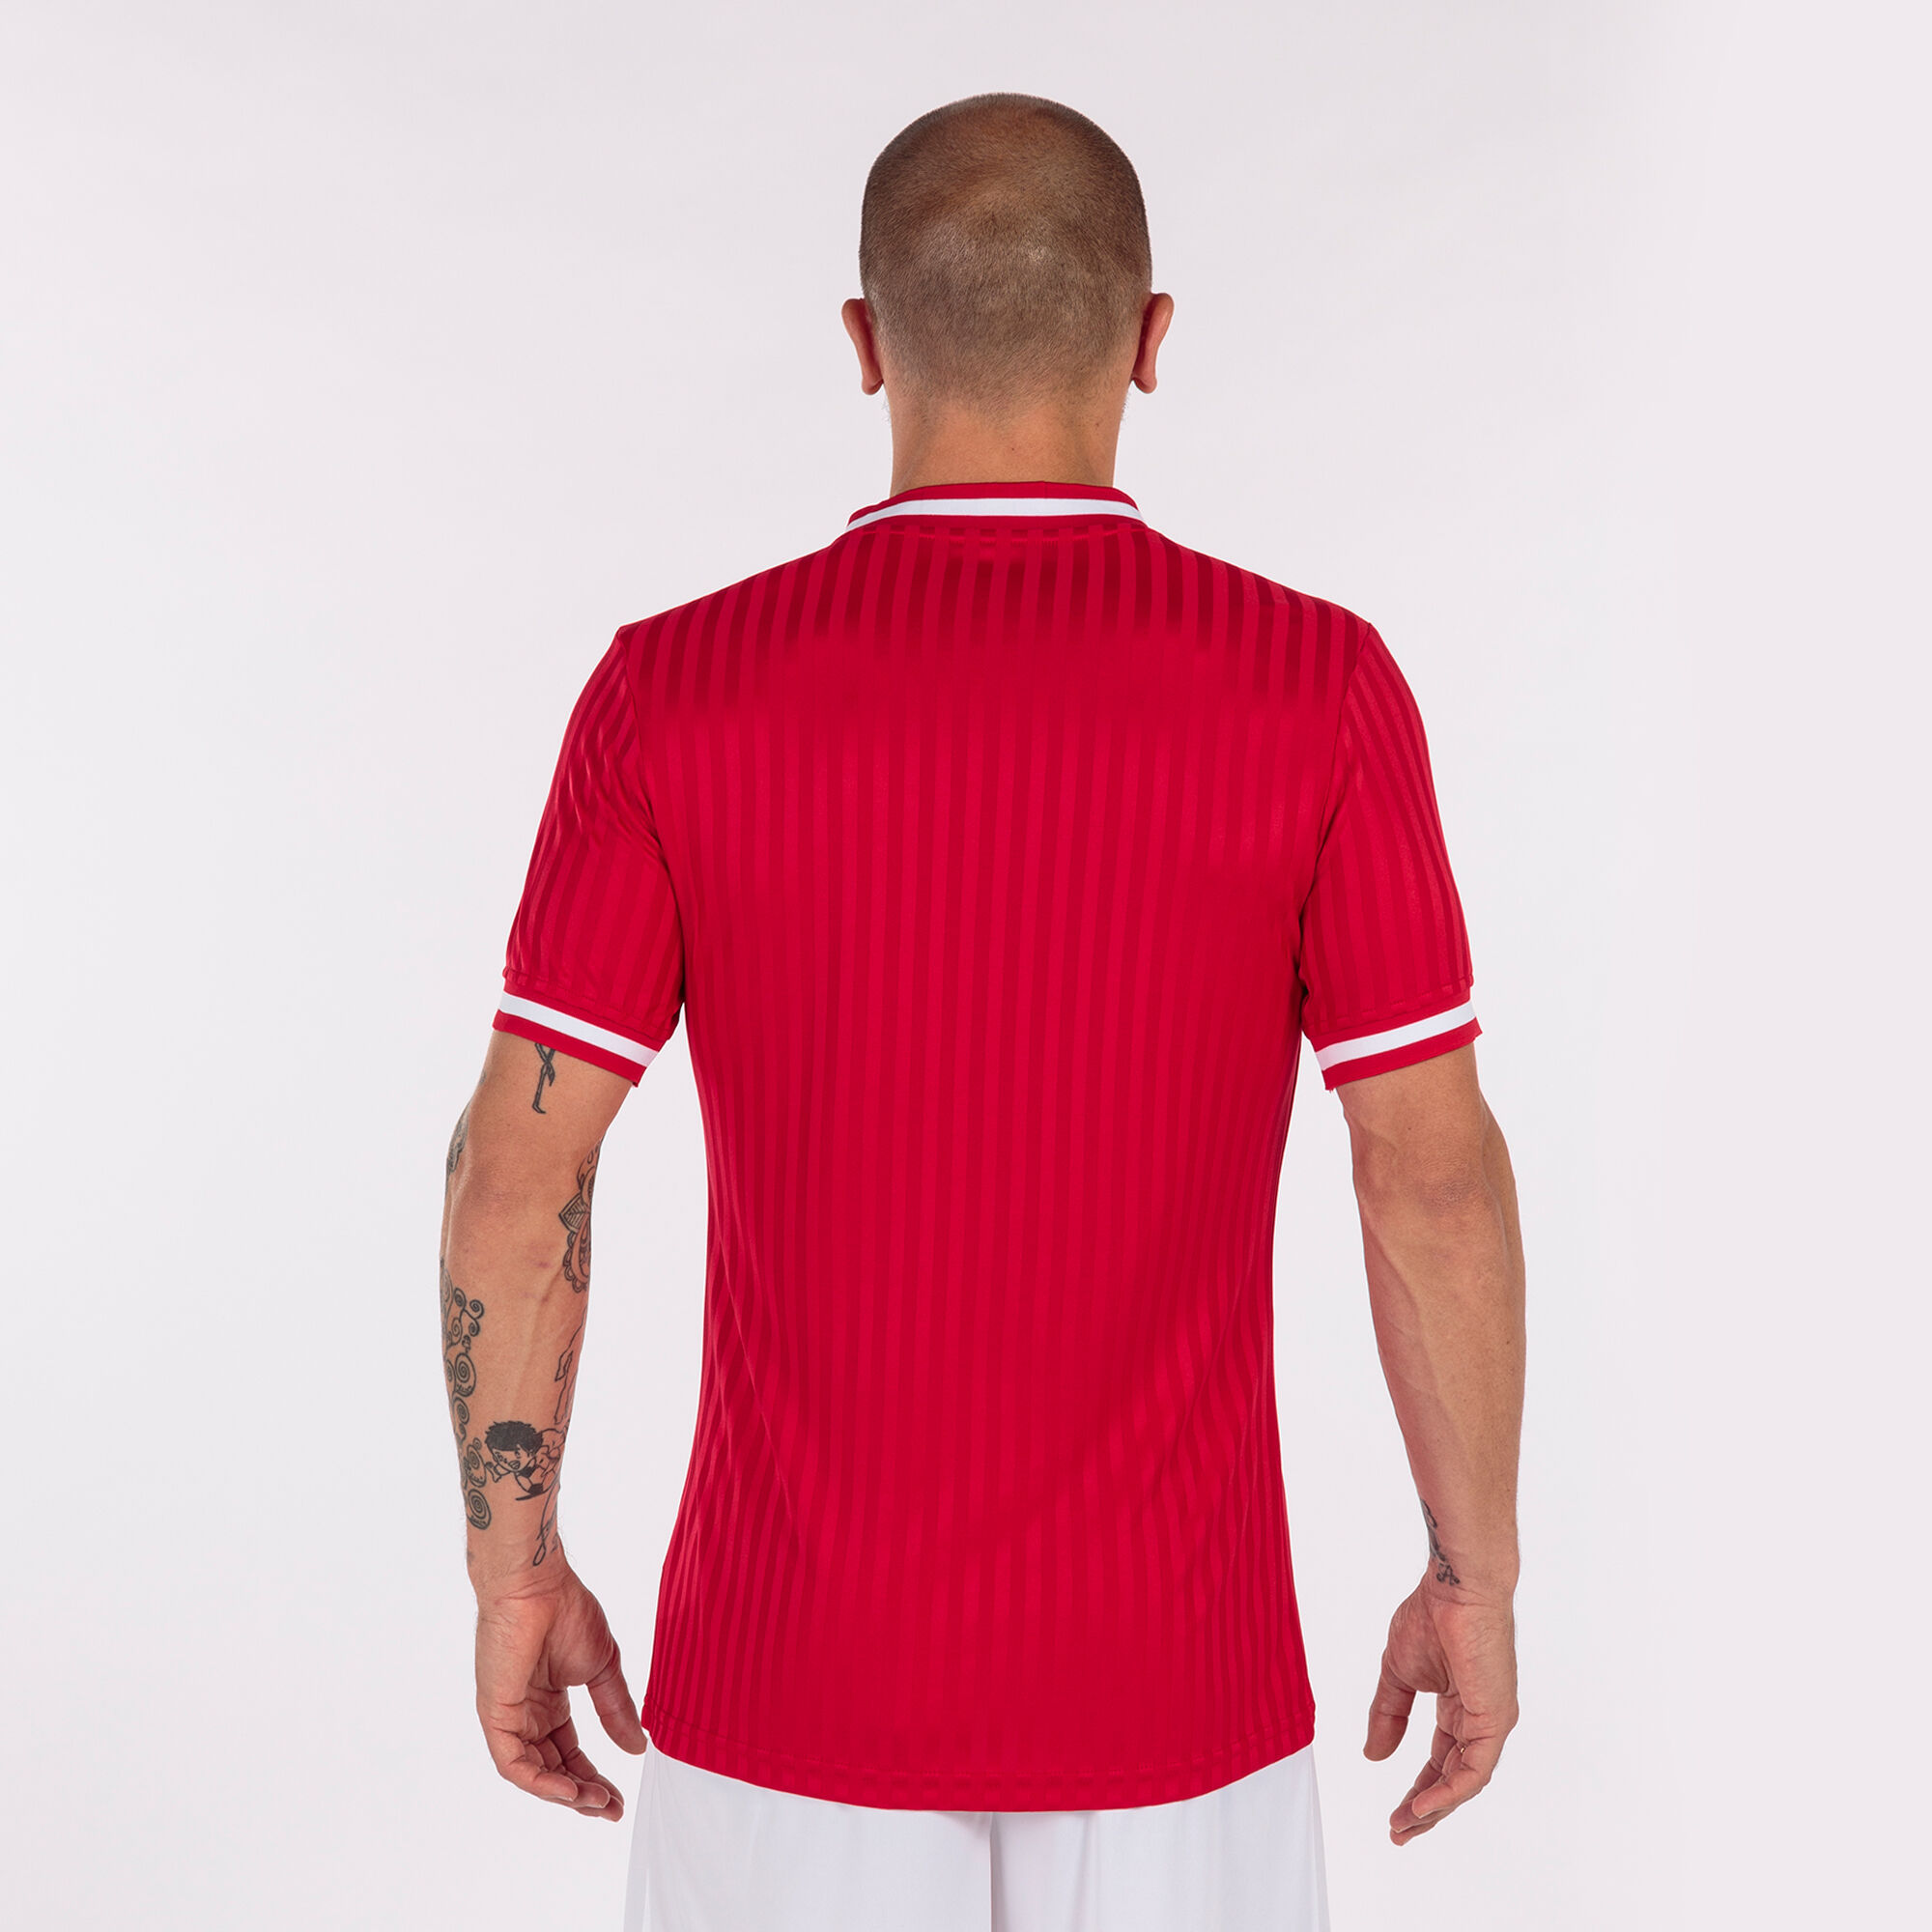 Camiseta manga corta hombre Toletum III rojo